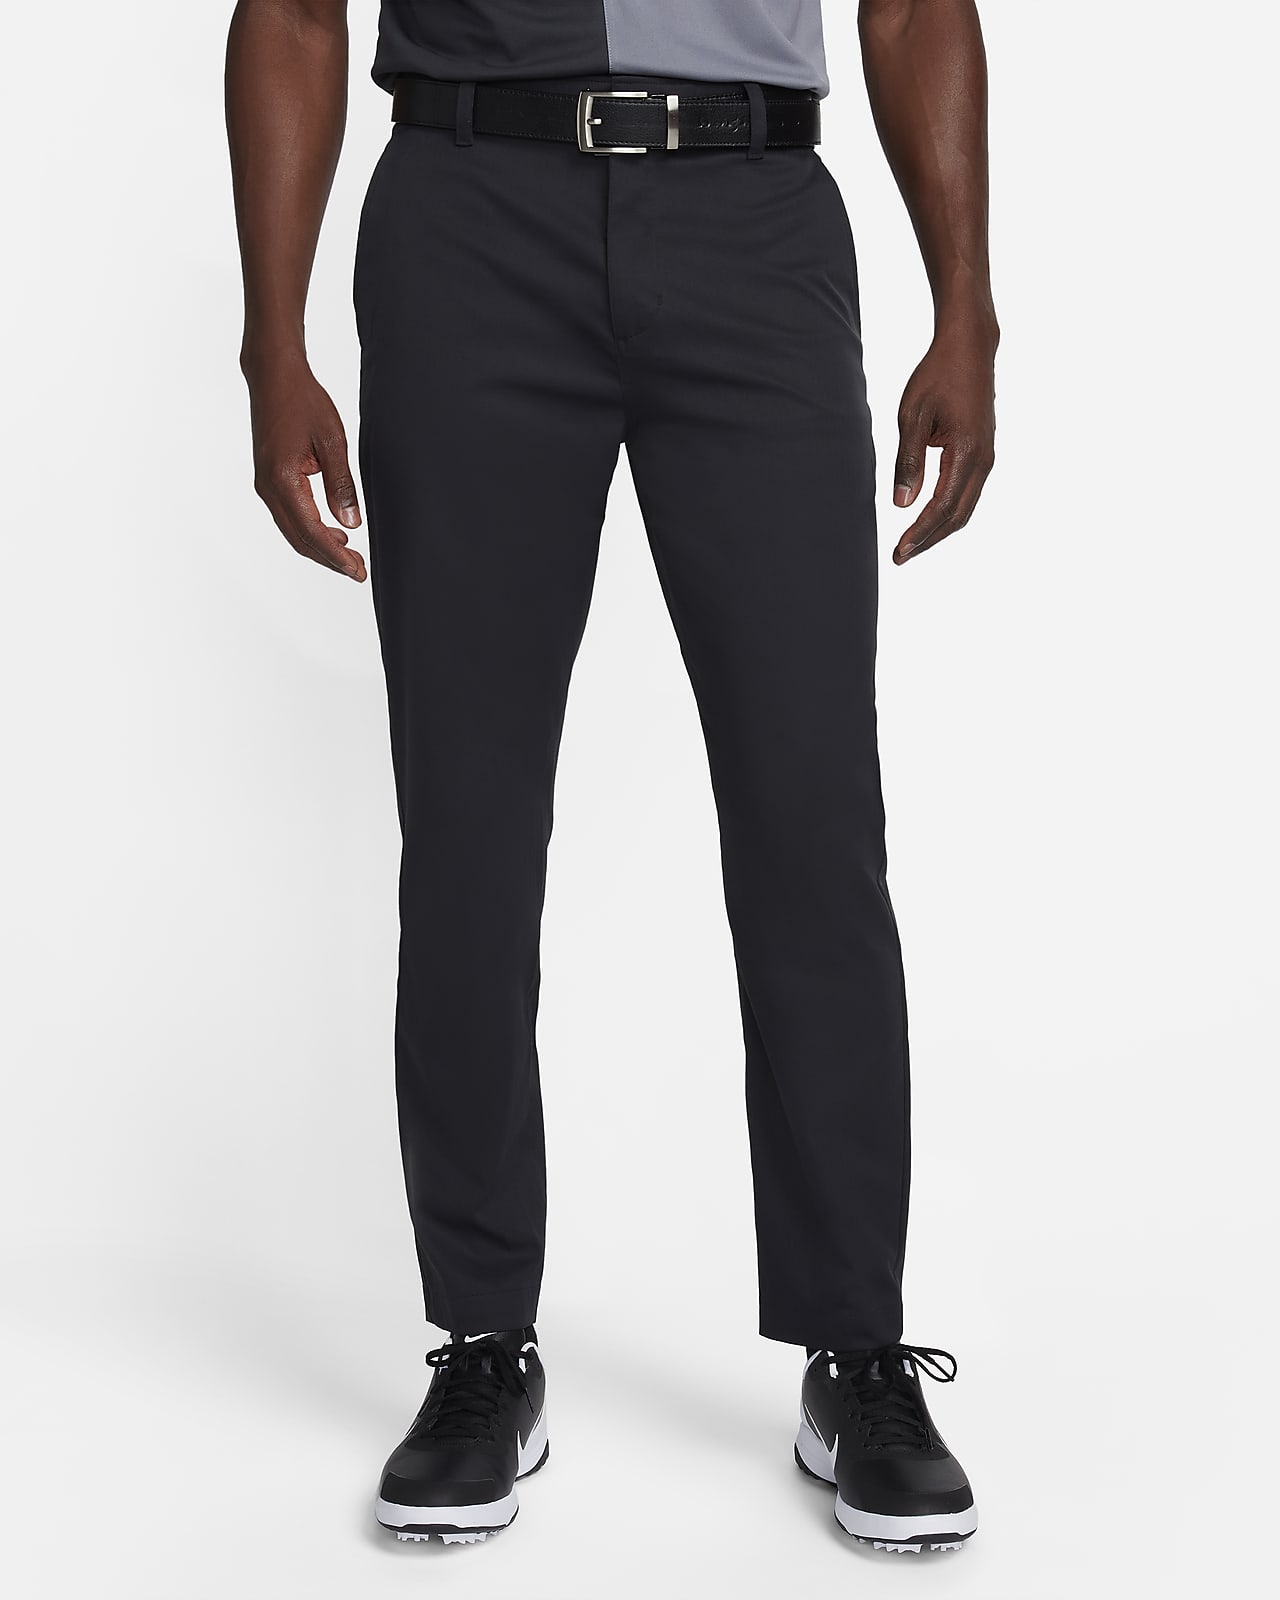 Buy Nike Flex Repel Slim-Fit Golf Pants | Golf Discount